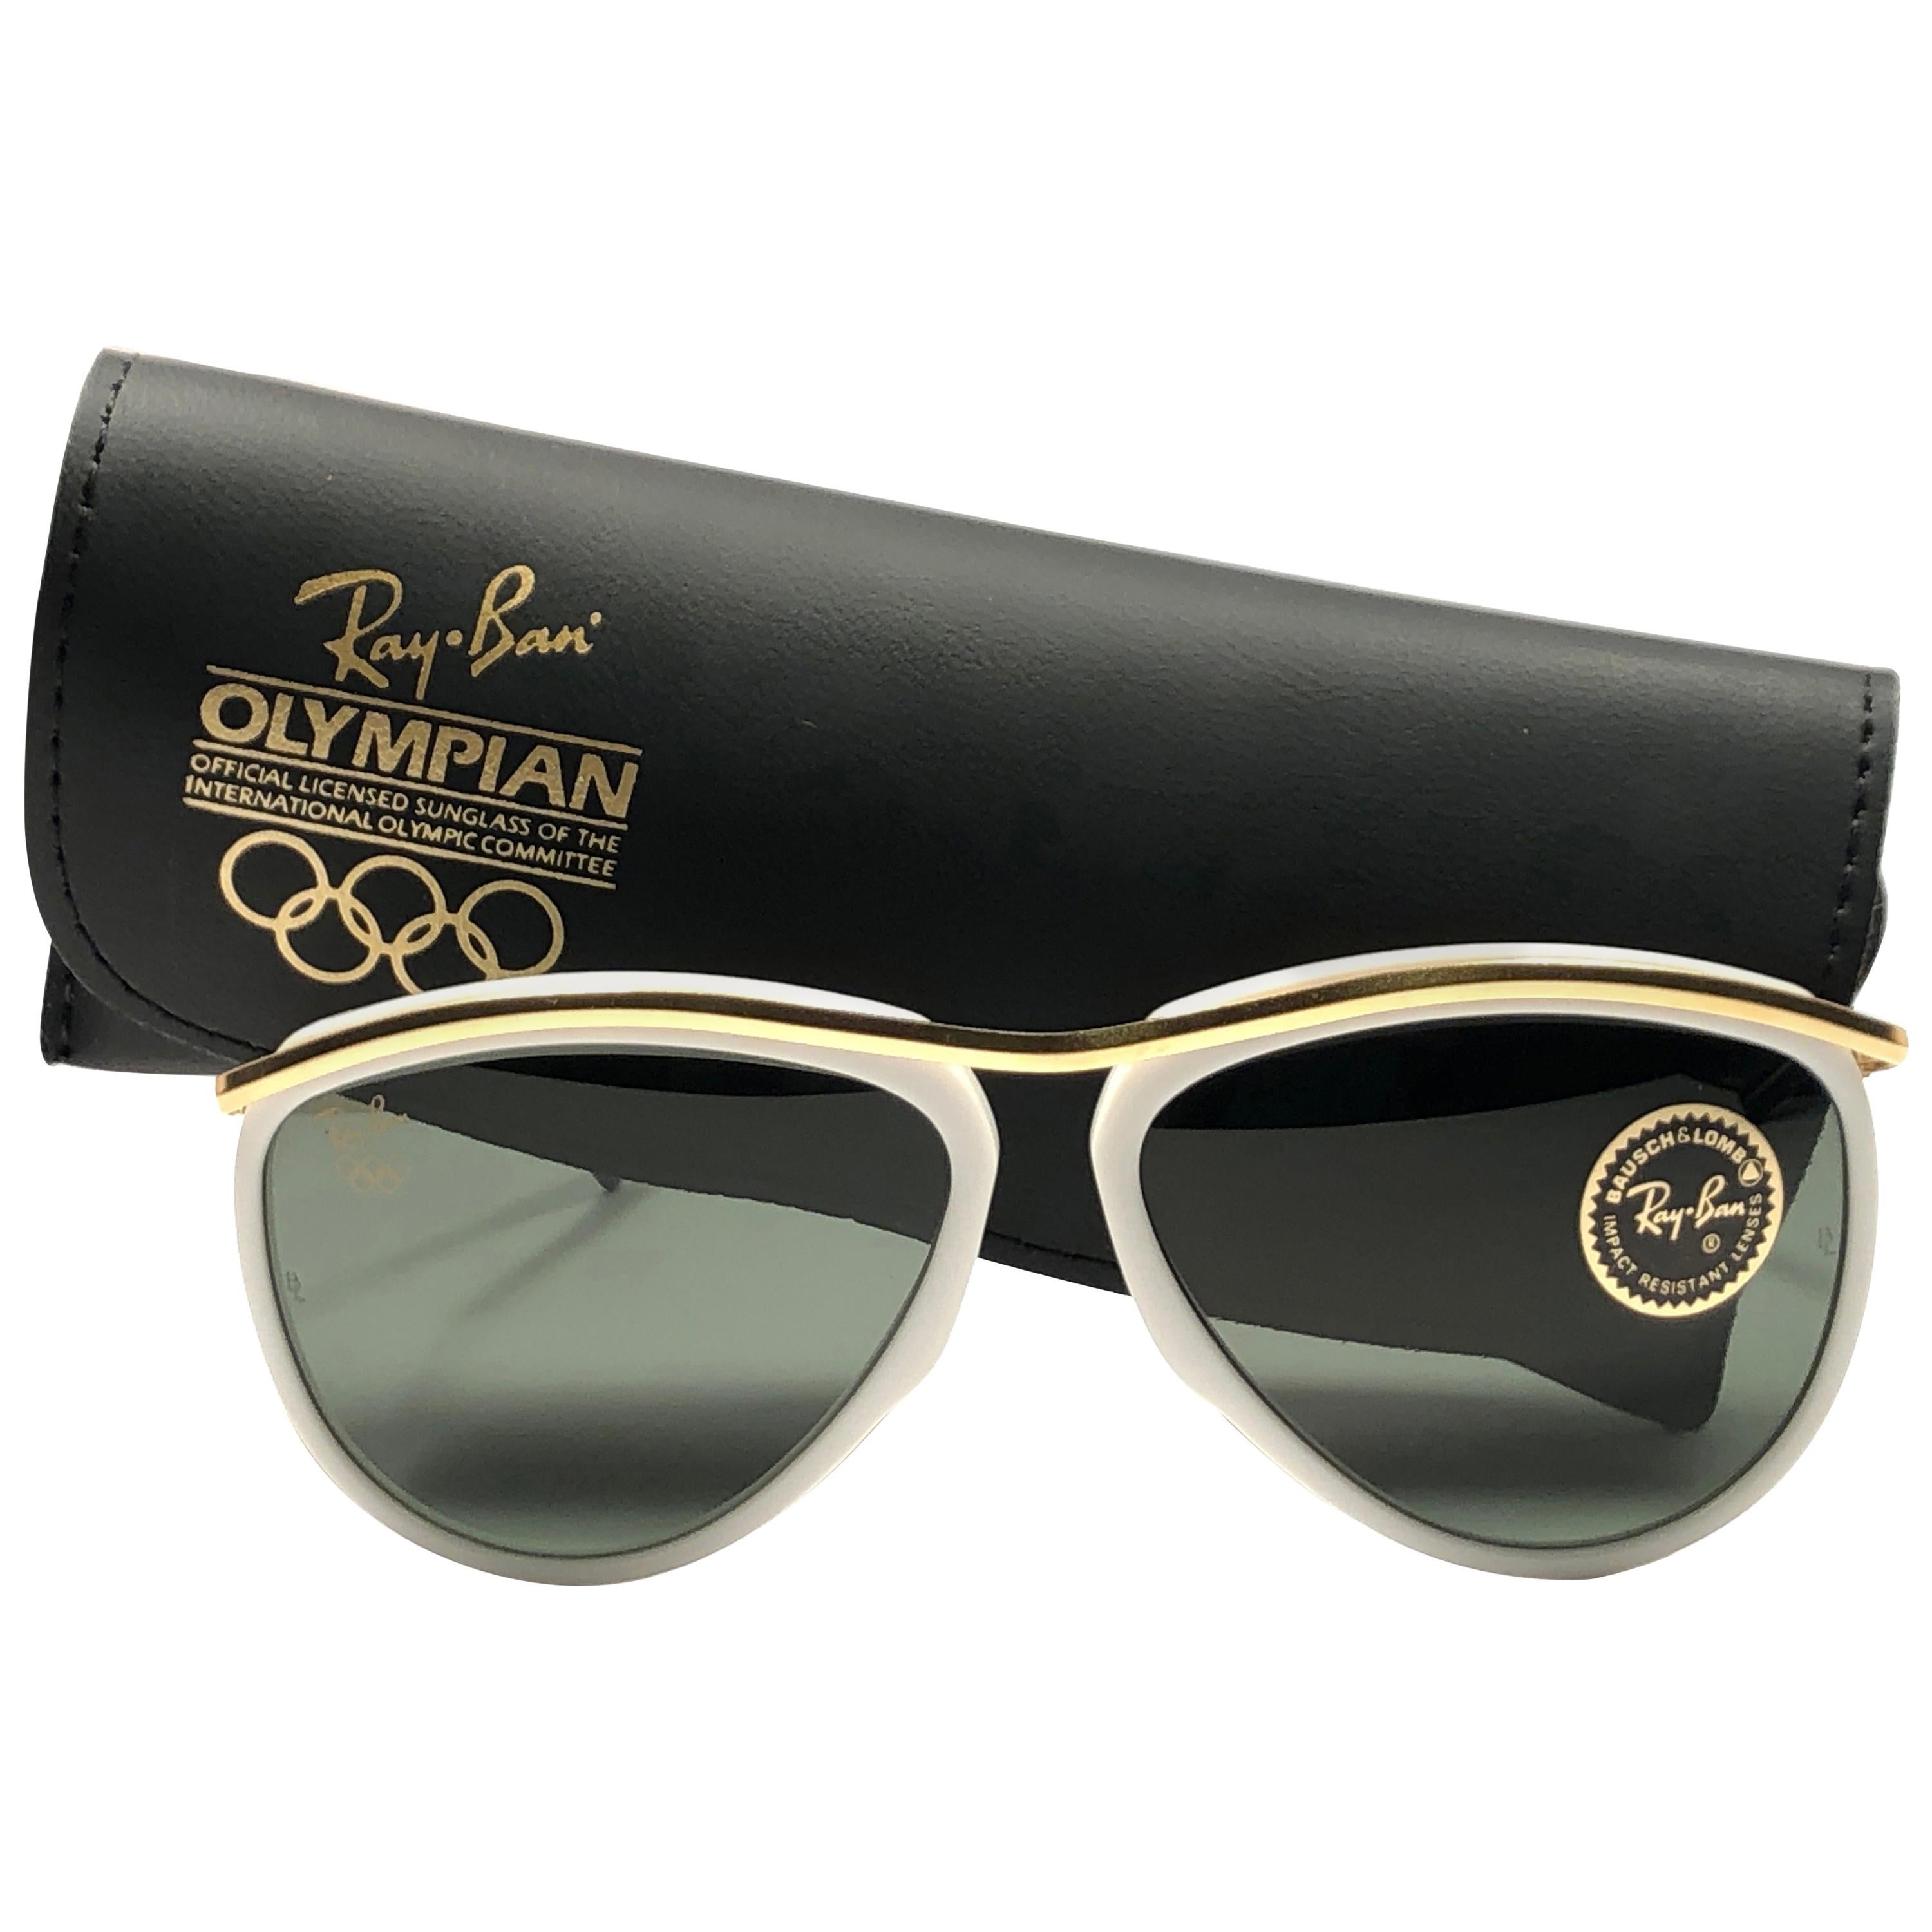 New Ray Ban Olympics Series White & Gold G15 Lenses 1992 B&L USA 80's  Sunglasses